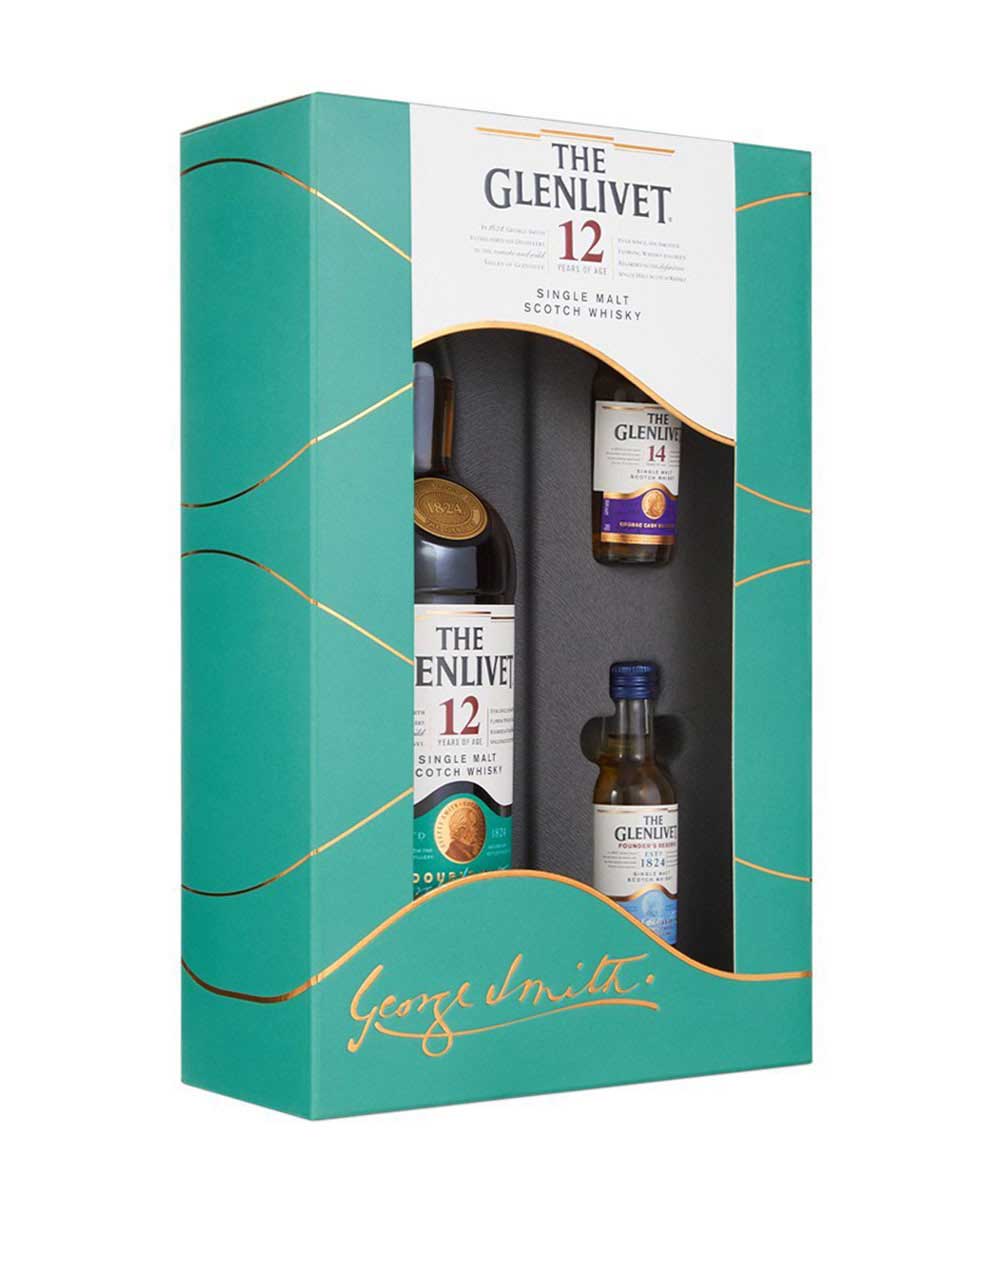 The Glenlivet 12 year Old Single Malt Scotch Whisky with 2 samples